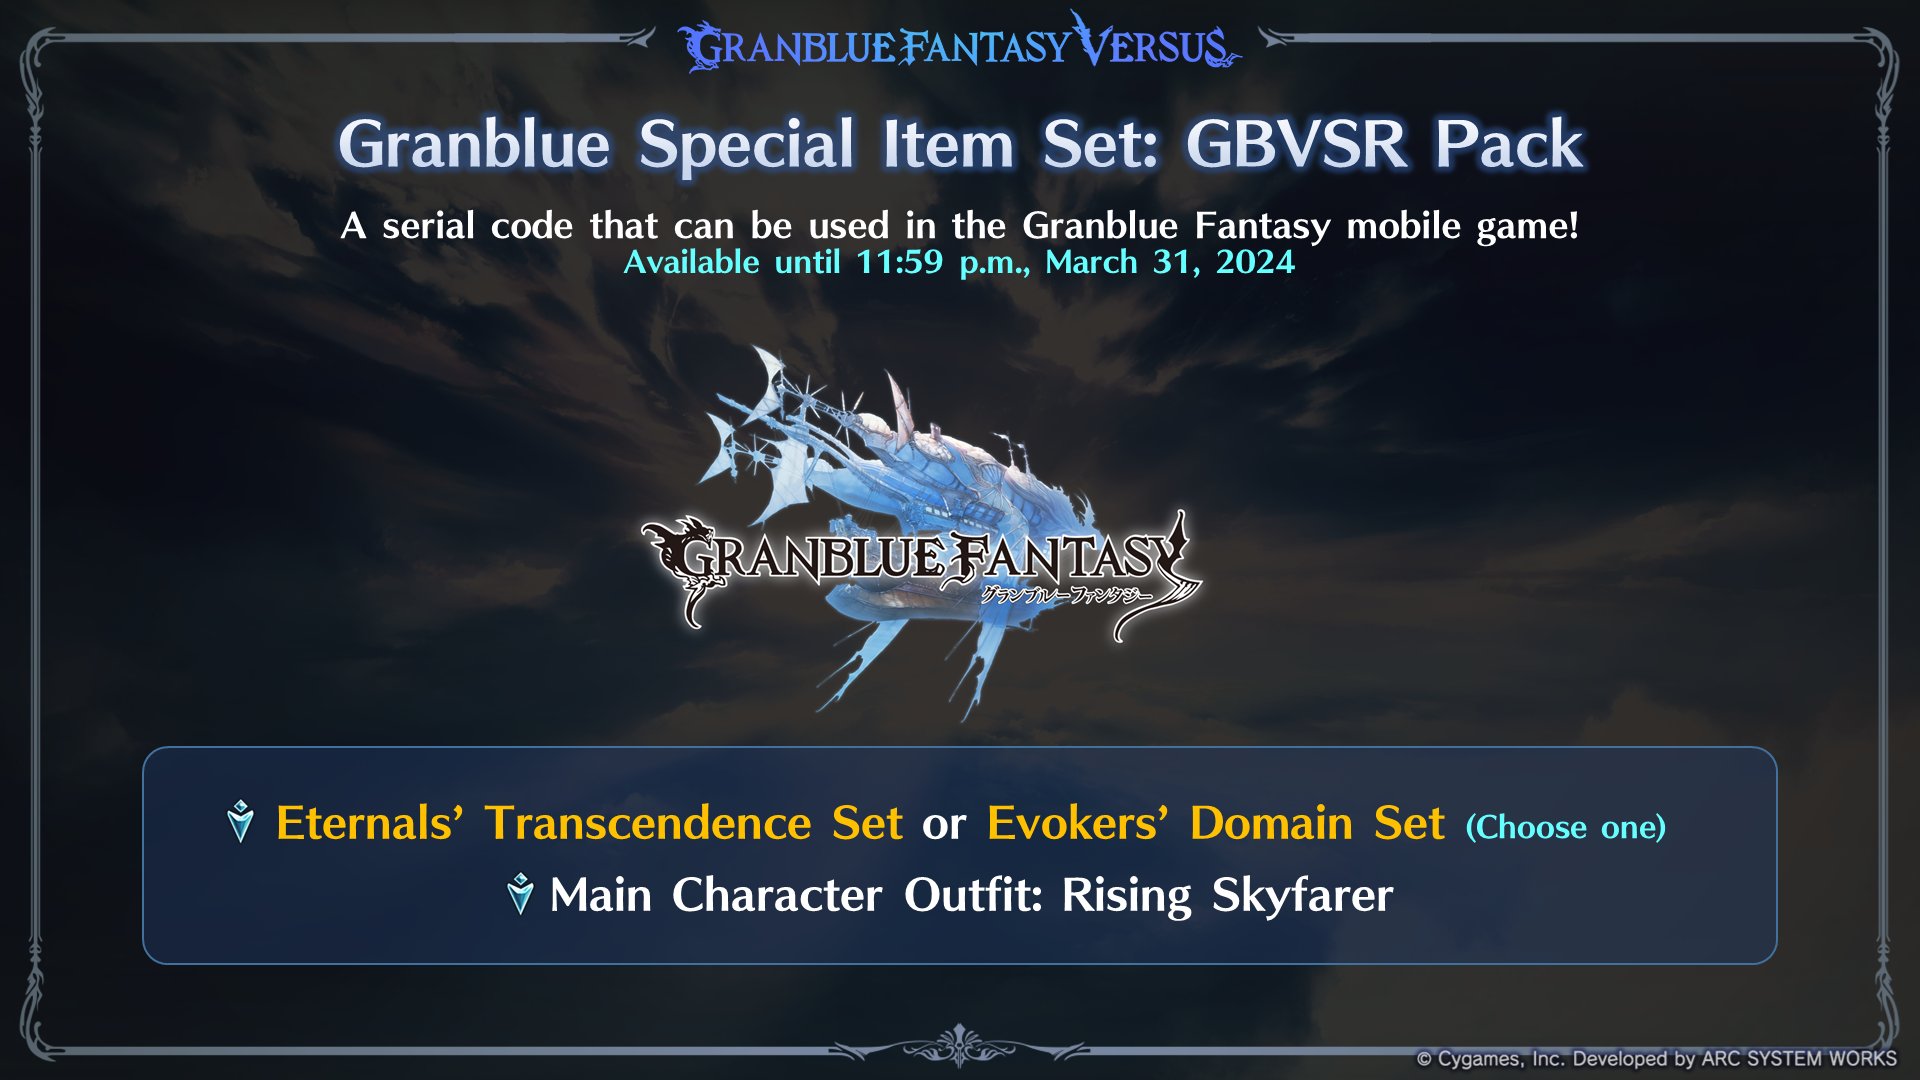 Granblue Fantasy Versus: Rising Standard Edition